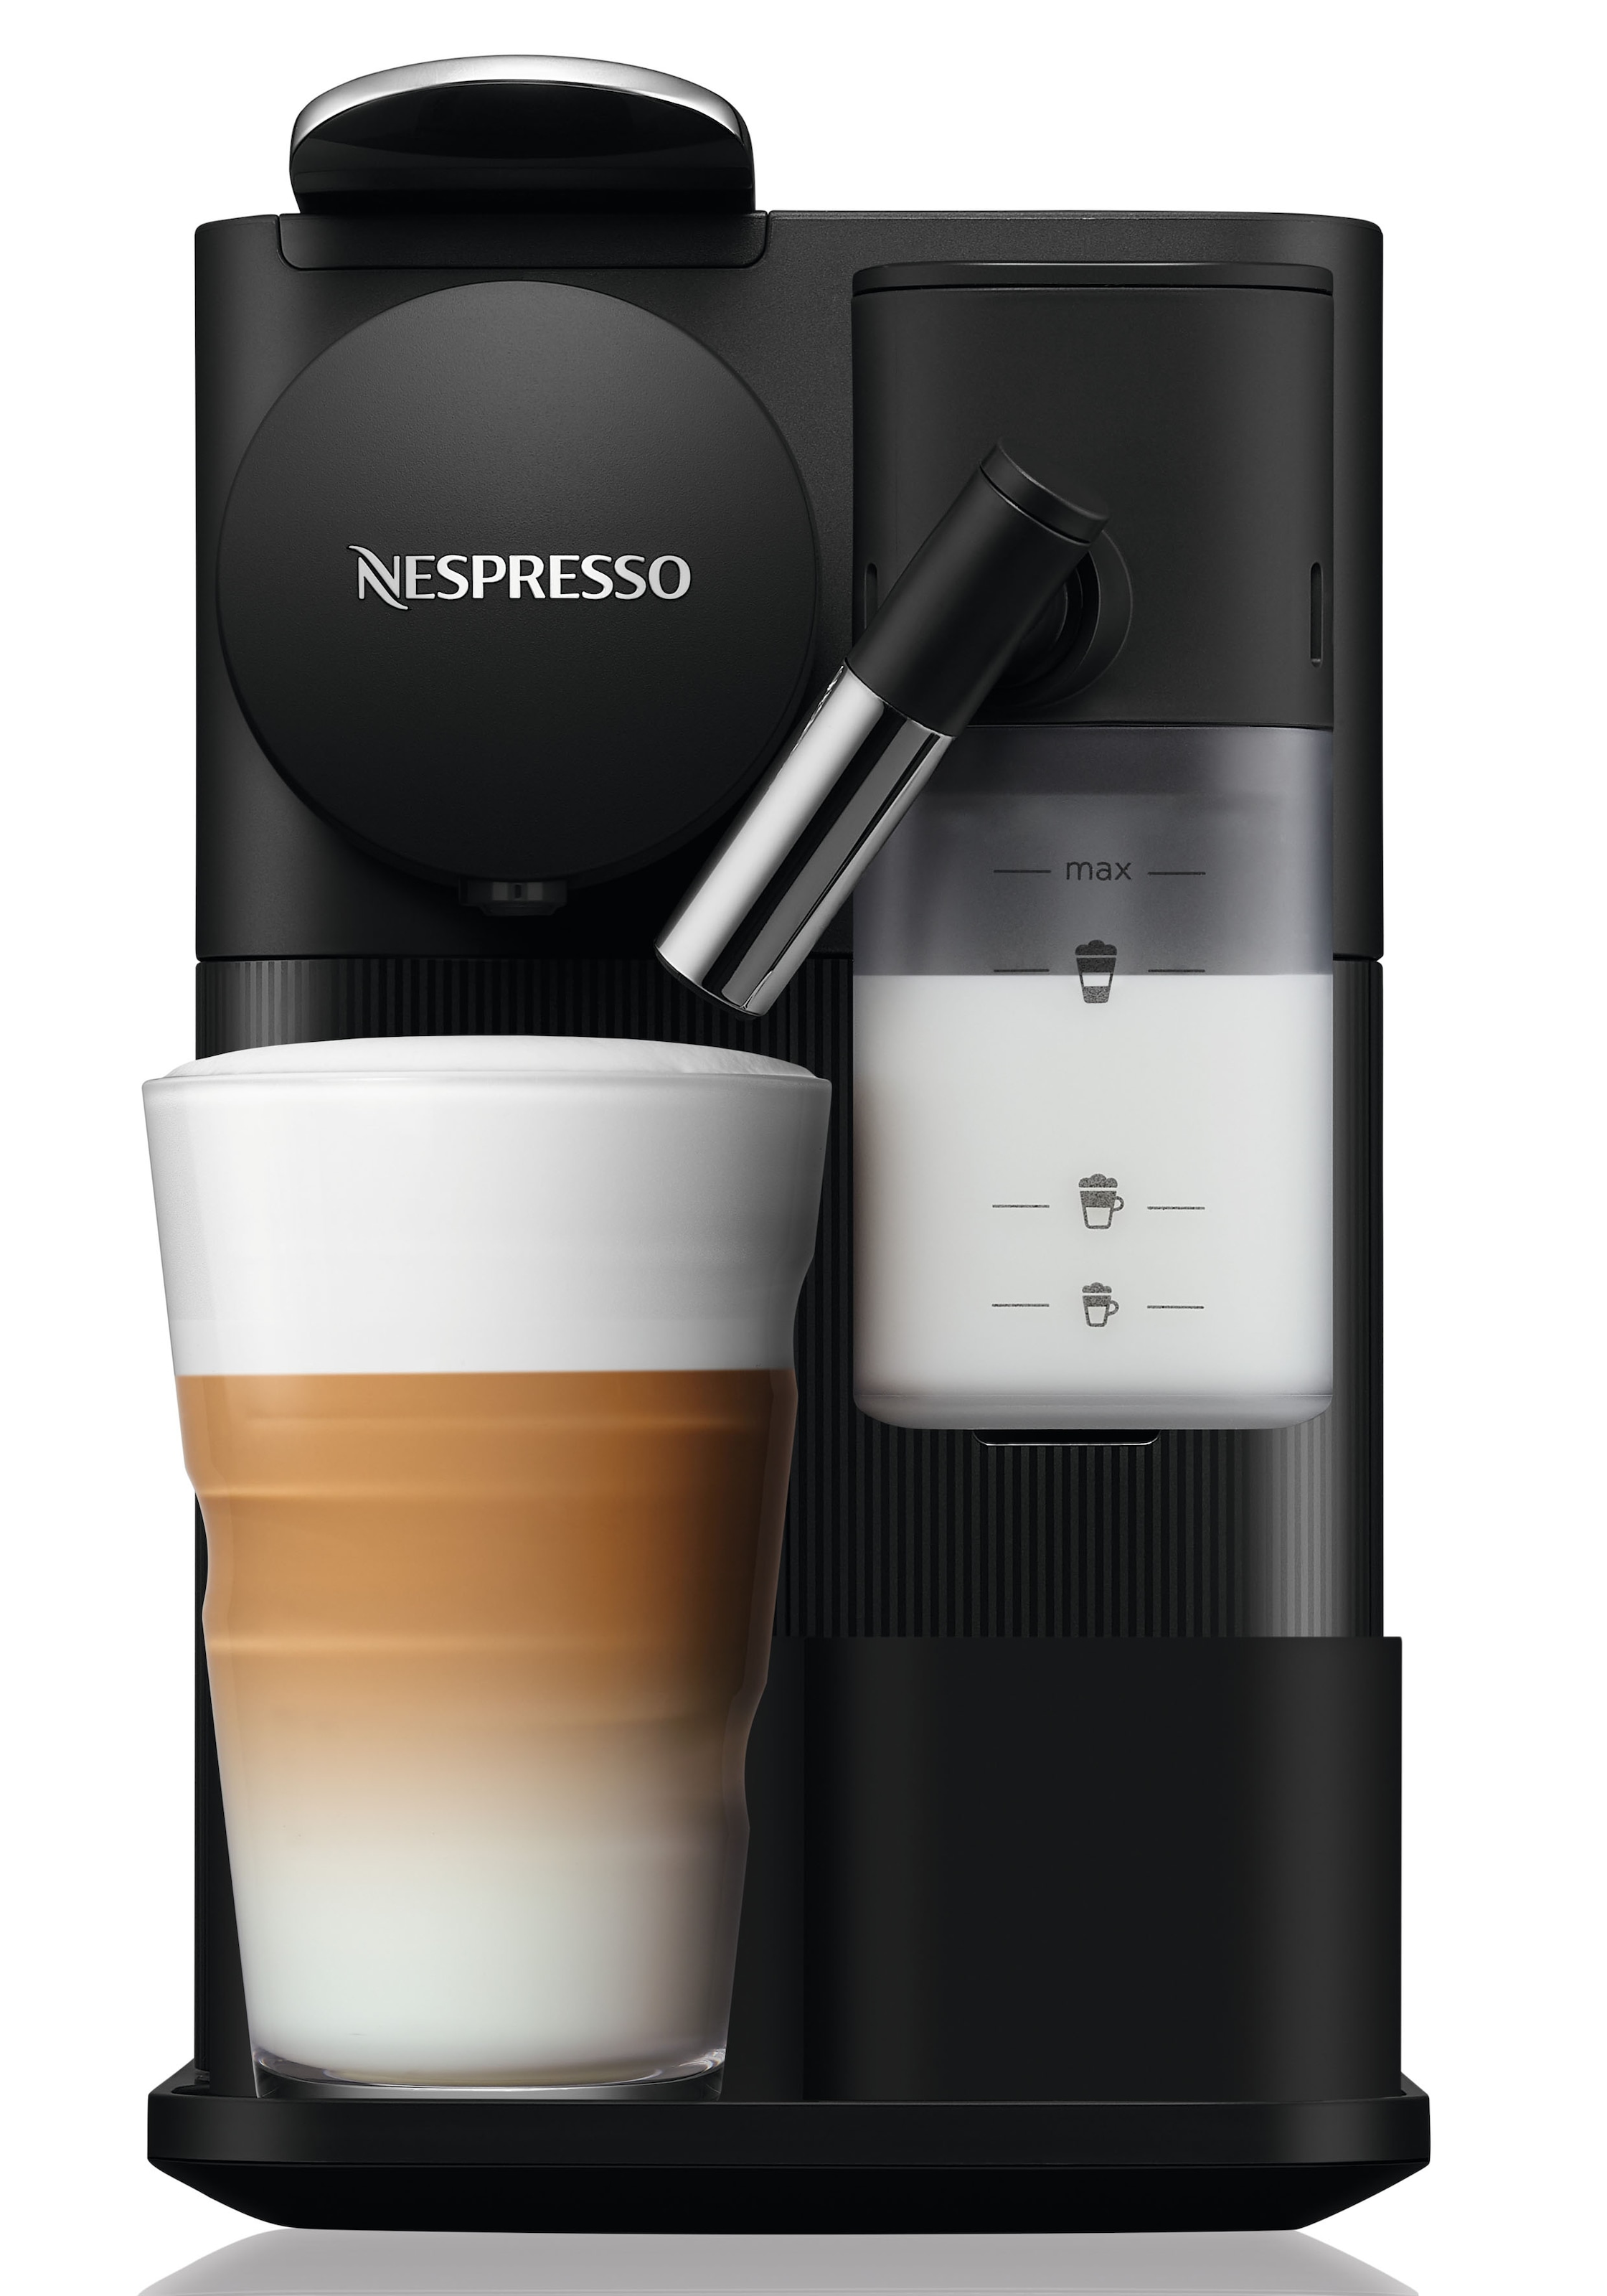 Nespresso Kapselmaschine »Lattissima One EN510.B von DeLonghi, Black«, inkl. Willkommenspaket mit 7 Kapseln